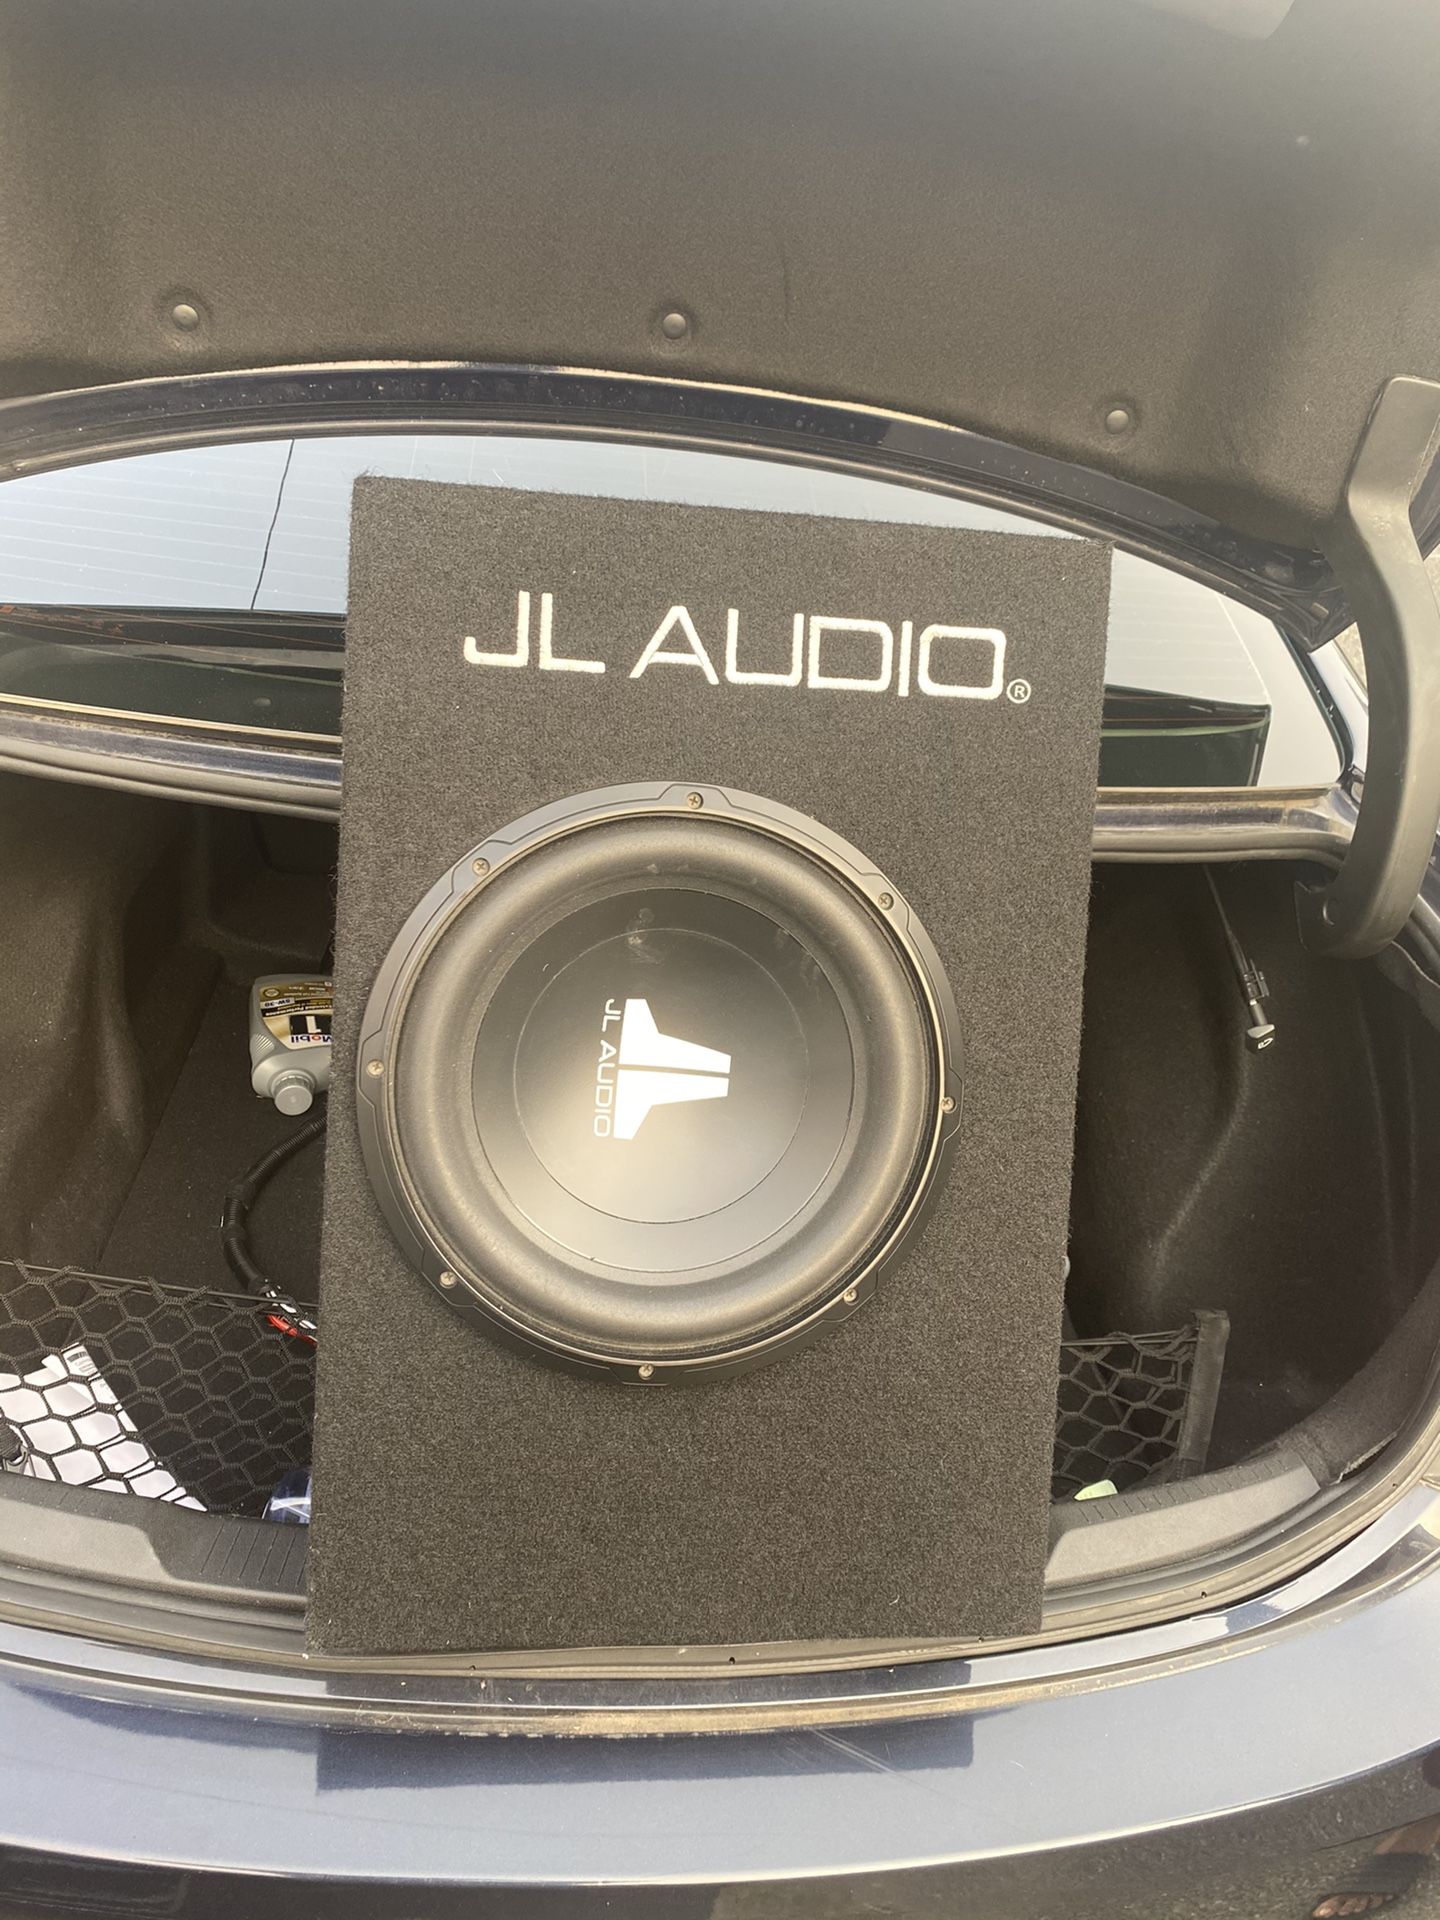 I’m sellin a JL audio speaker